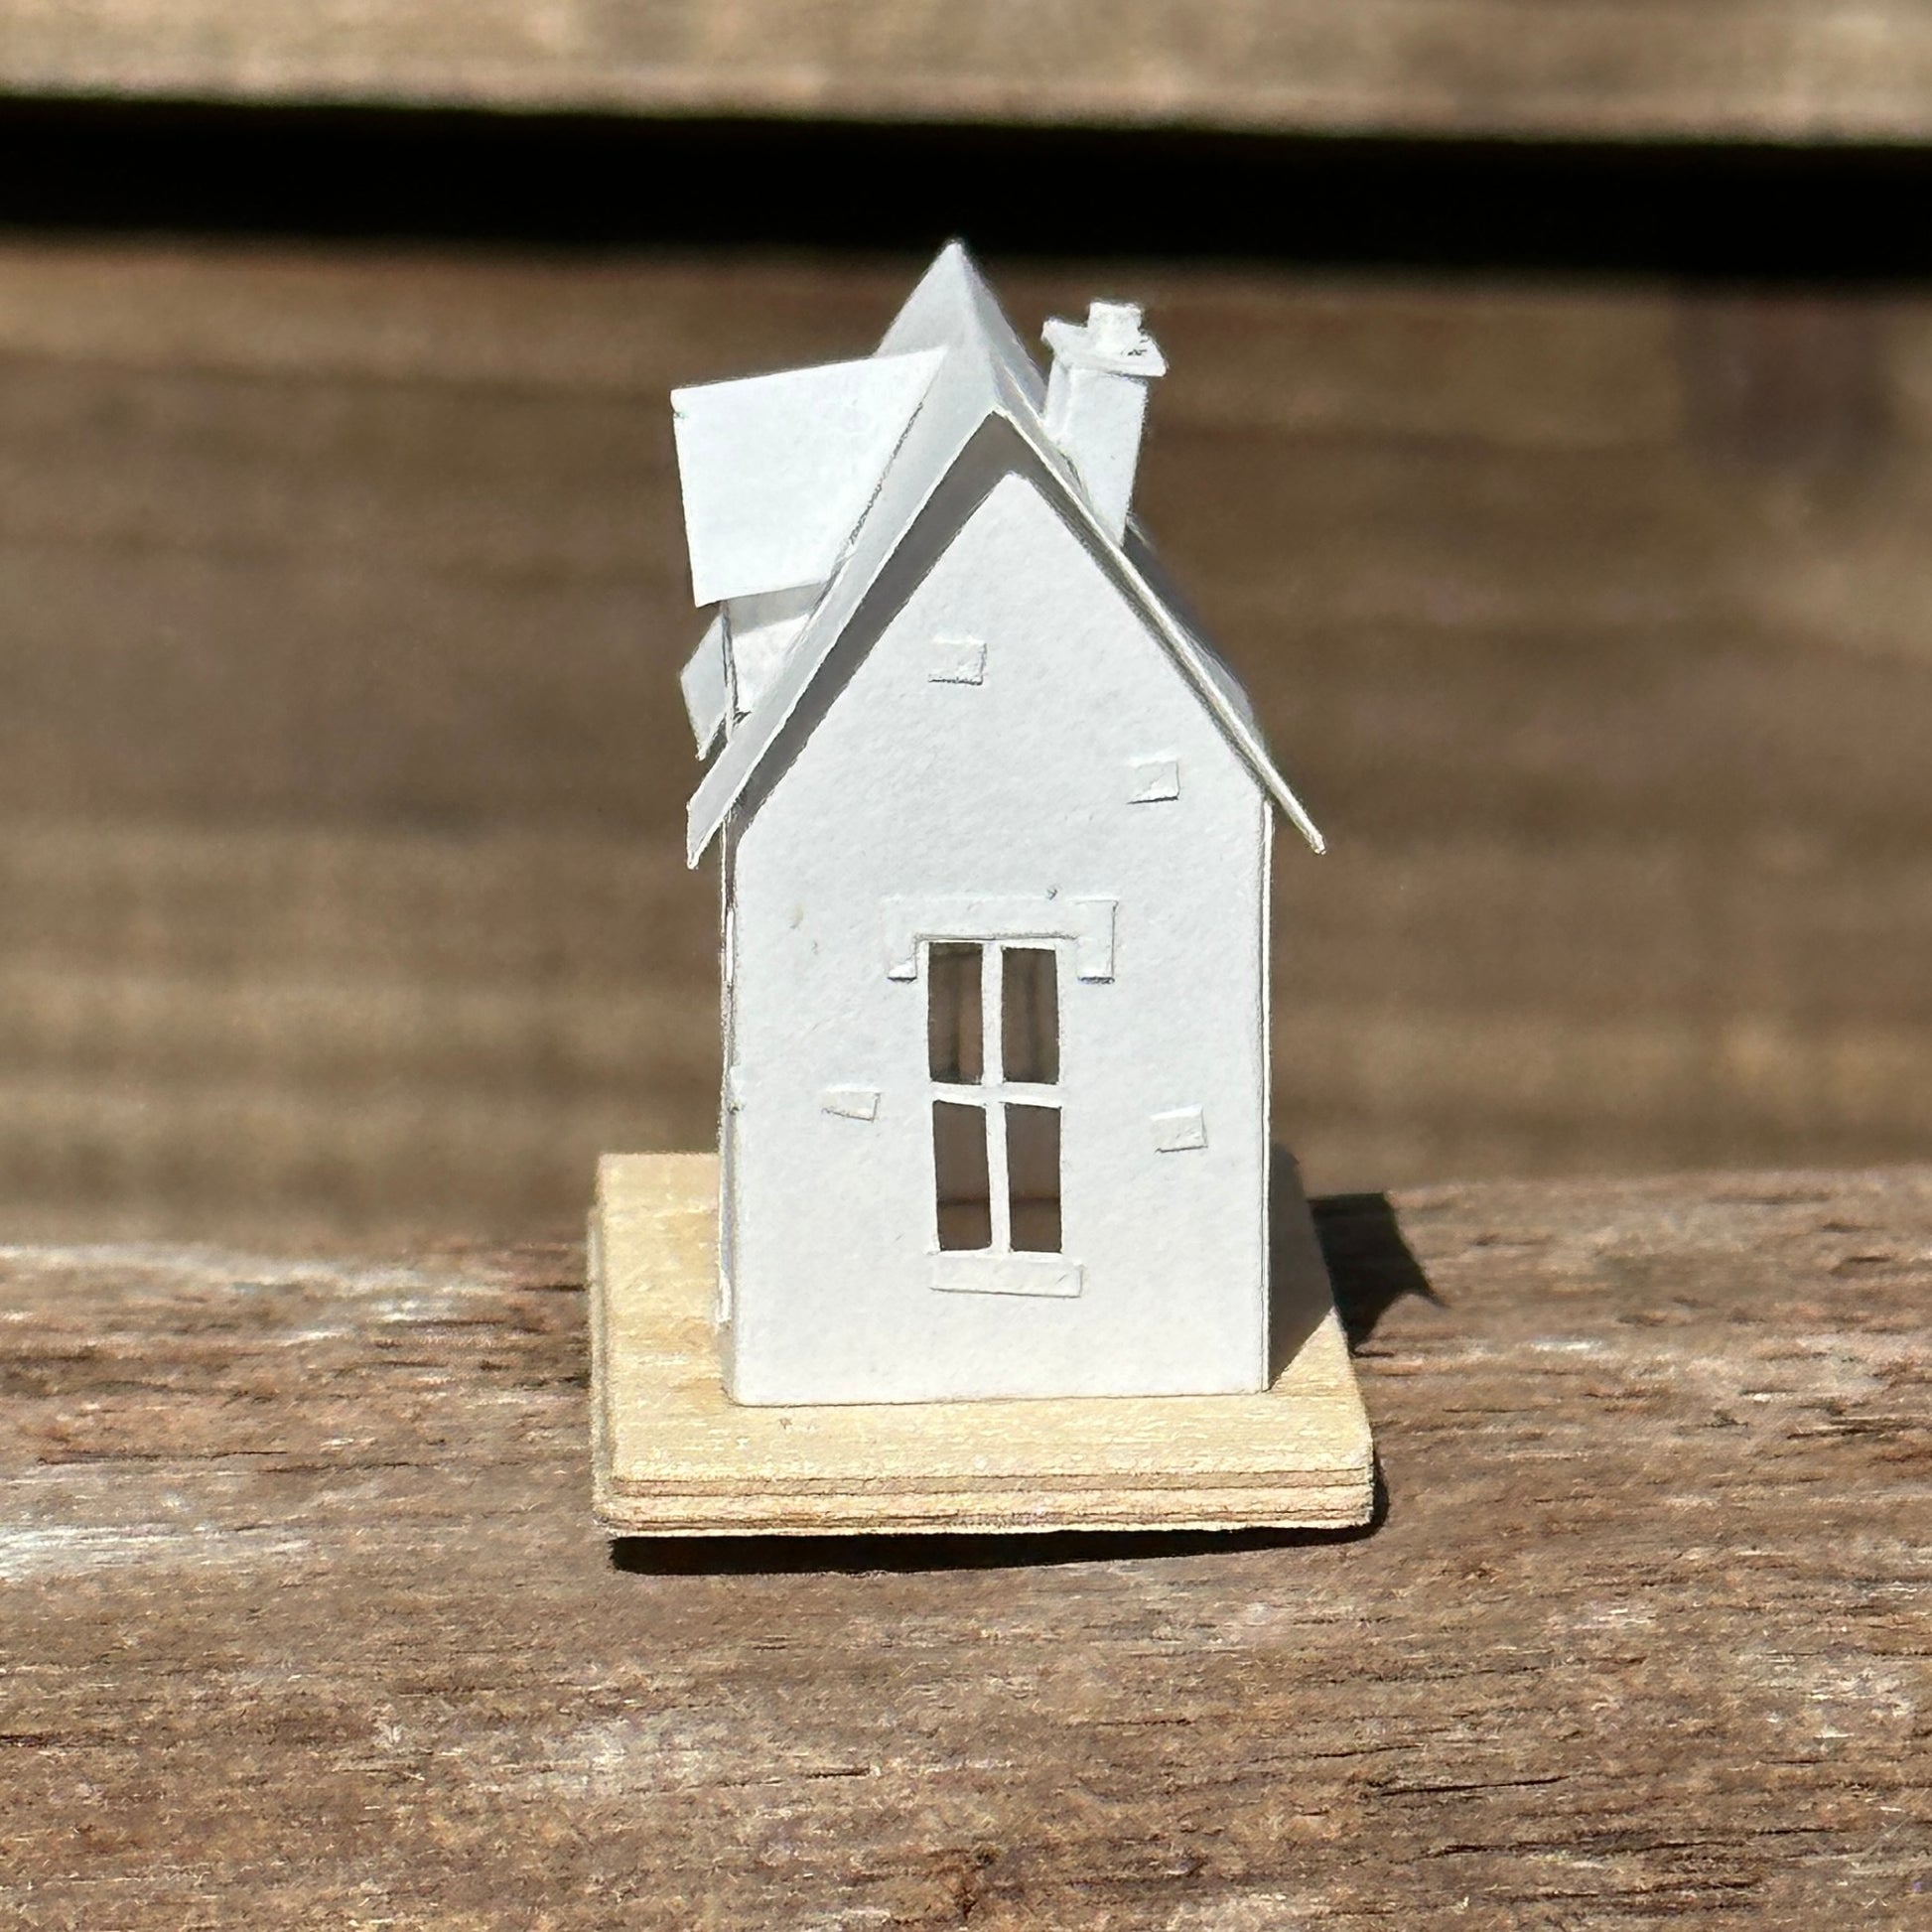  Miniature handmade paper house on plywood base